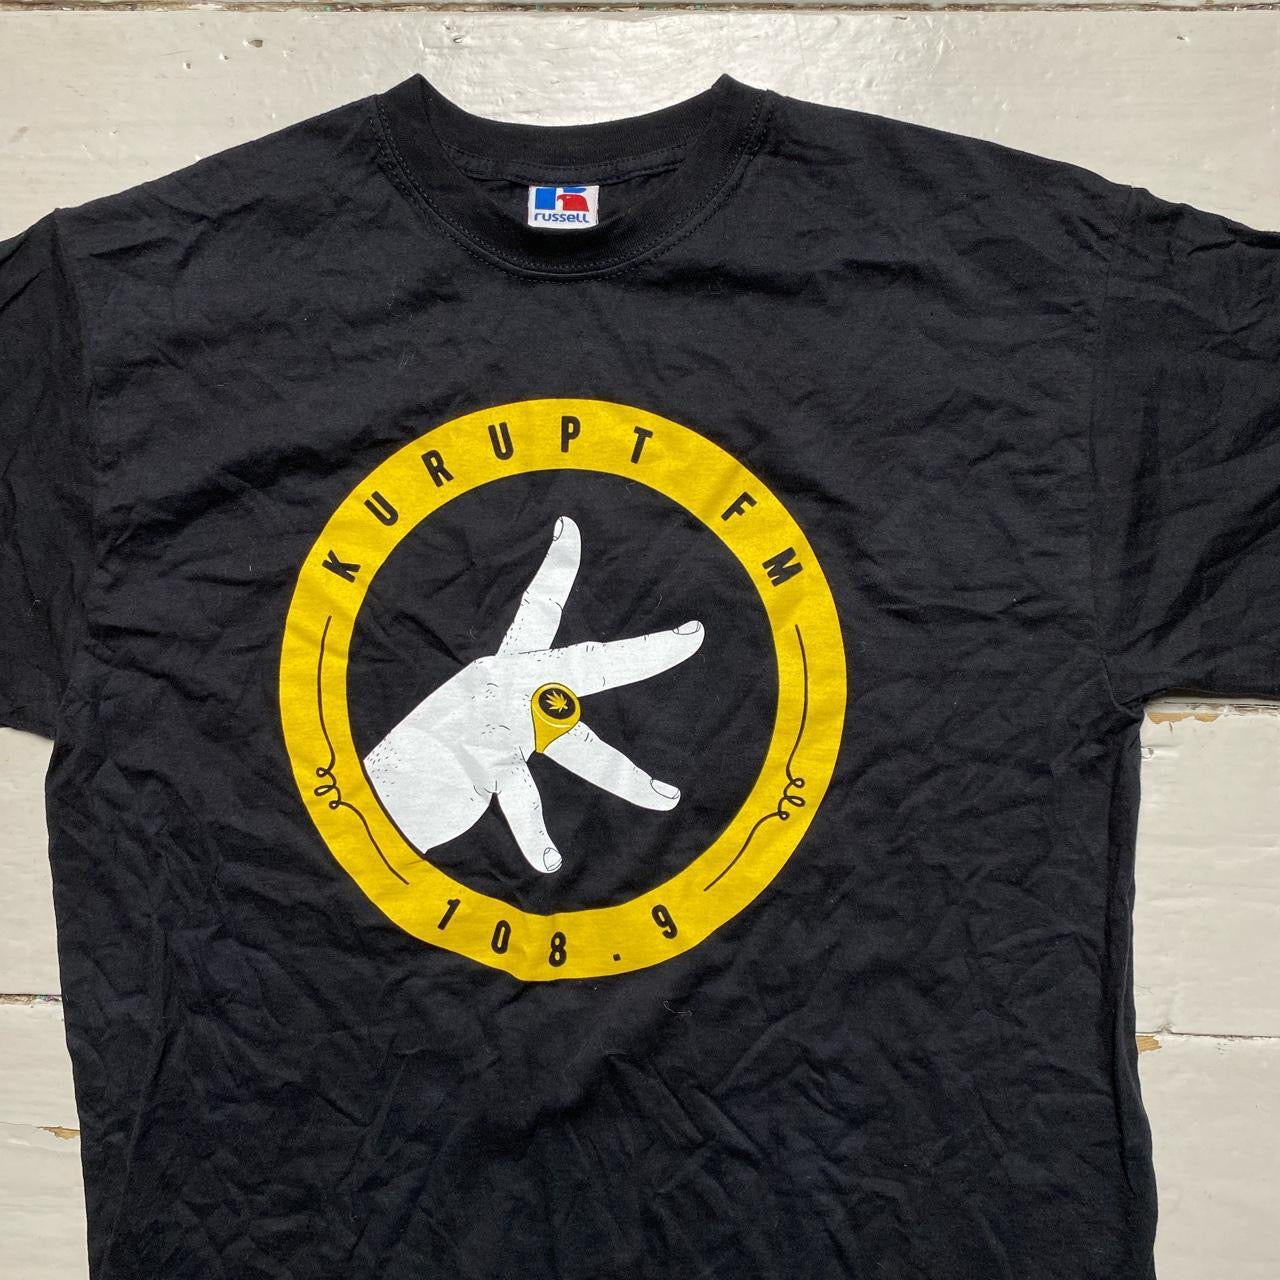 Kurupt FM T Shirt Black (Medium)